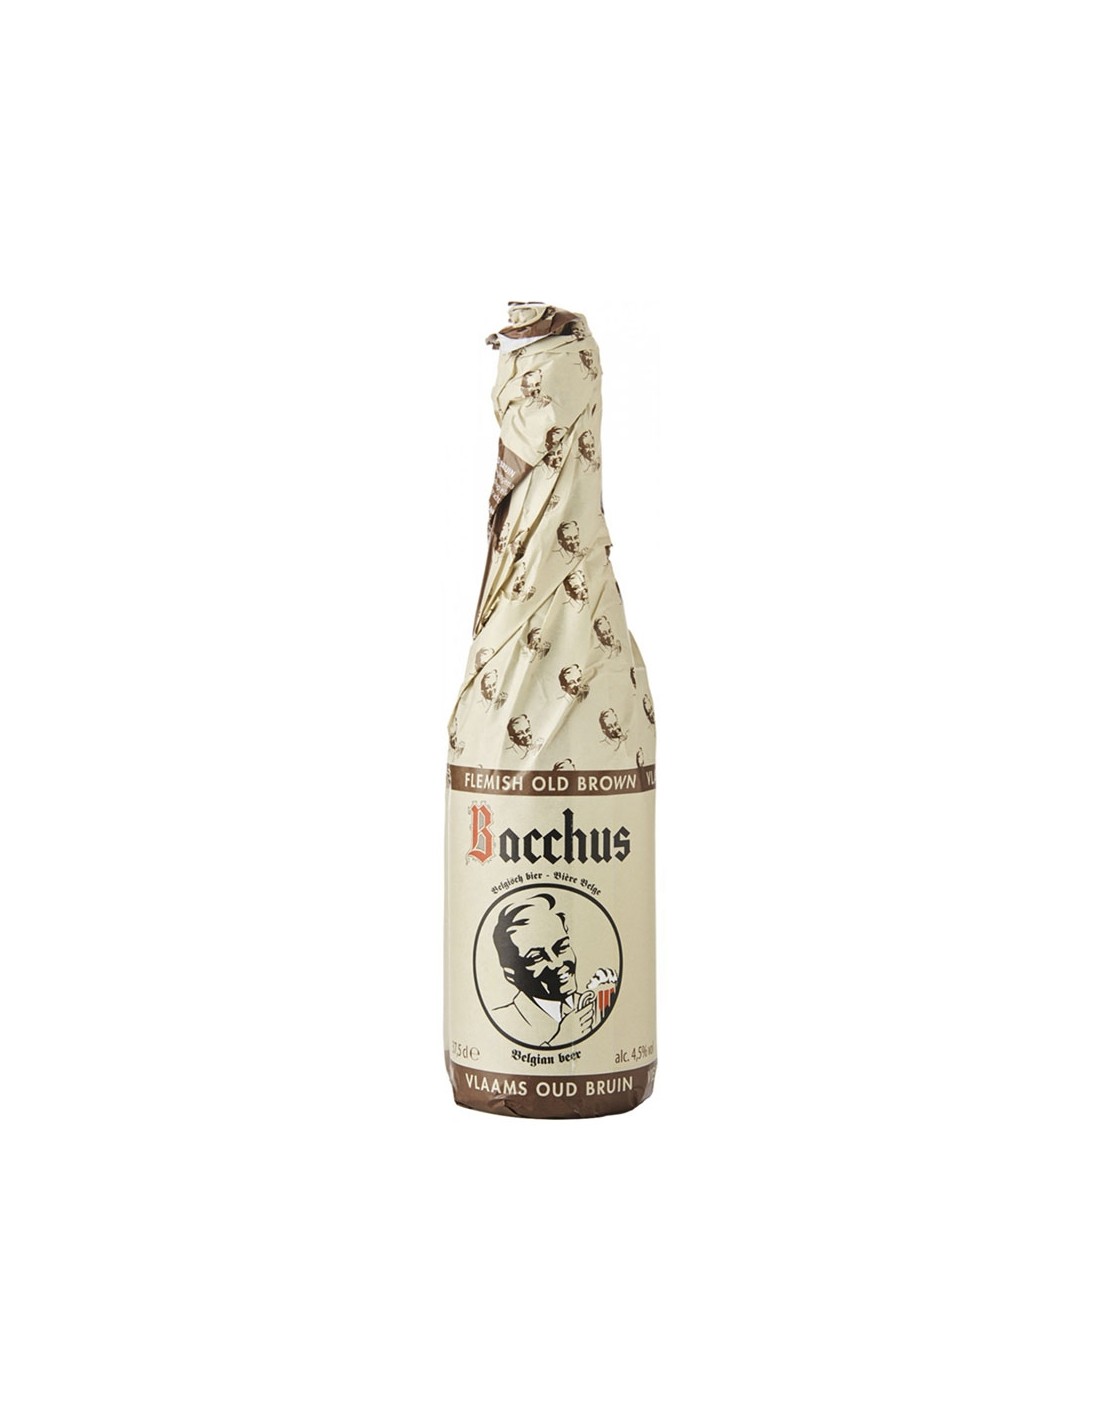 Bere bruna, nefiltrata Van Honsebrouck Bacchus, 4.5% alc., 0.375L, Belgia alcooldiscount.ro